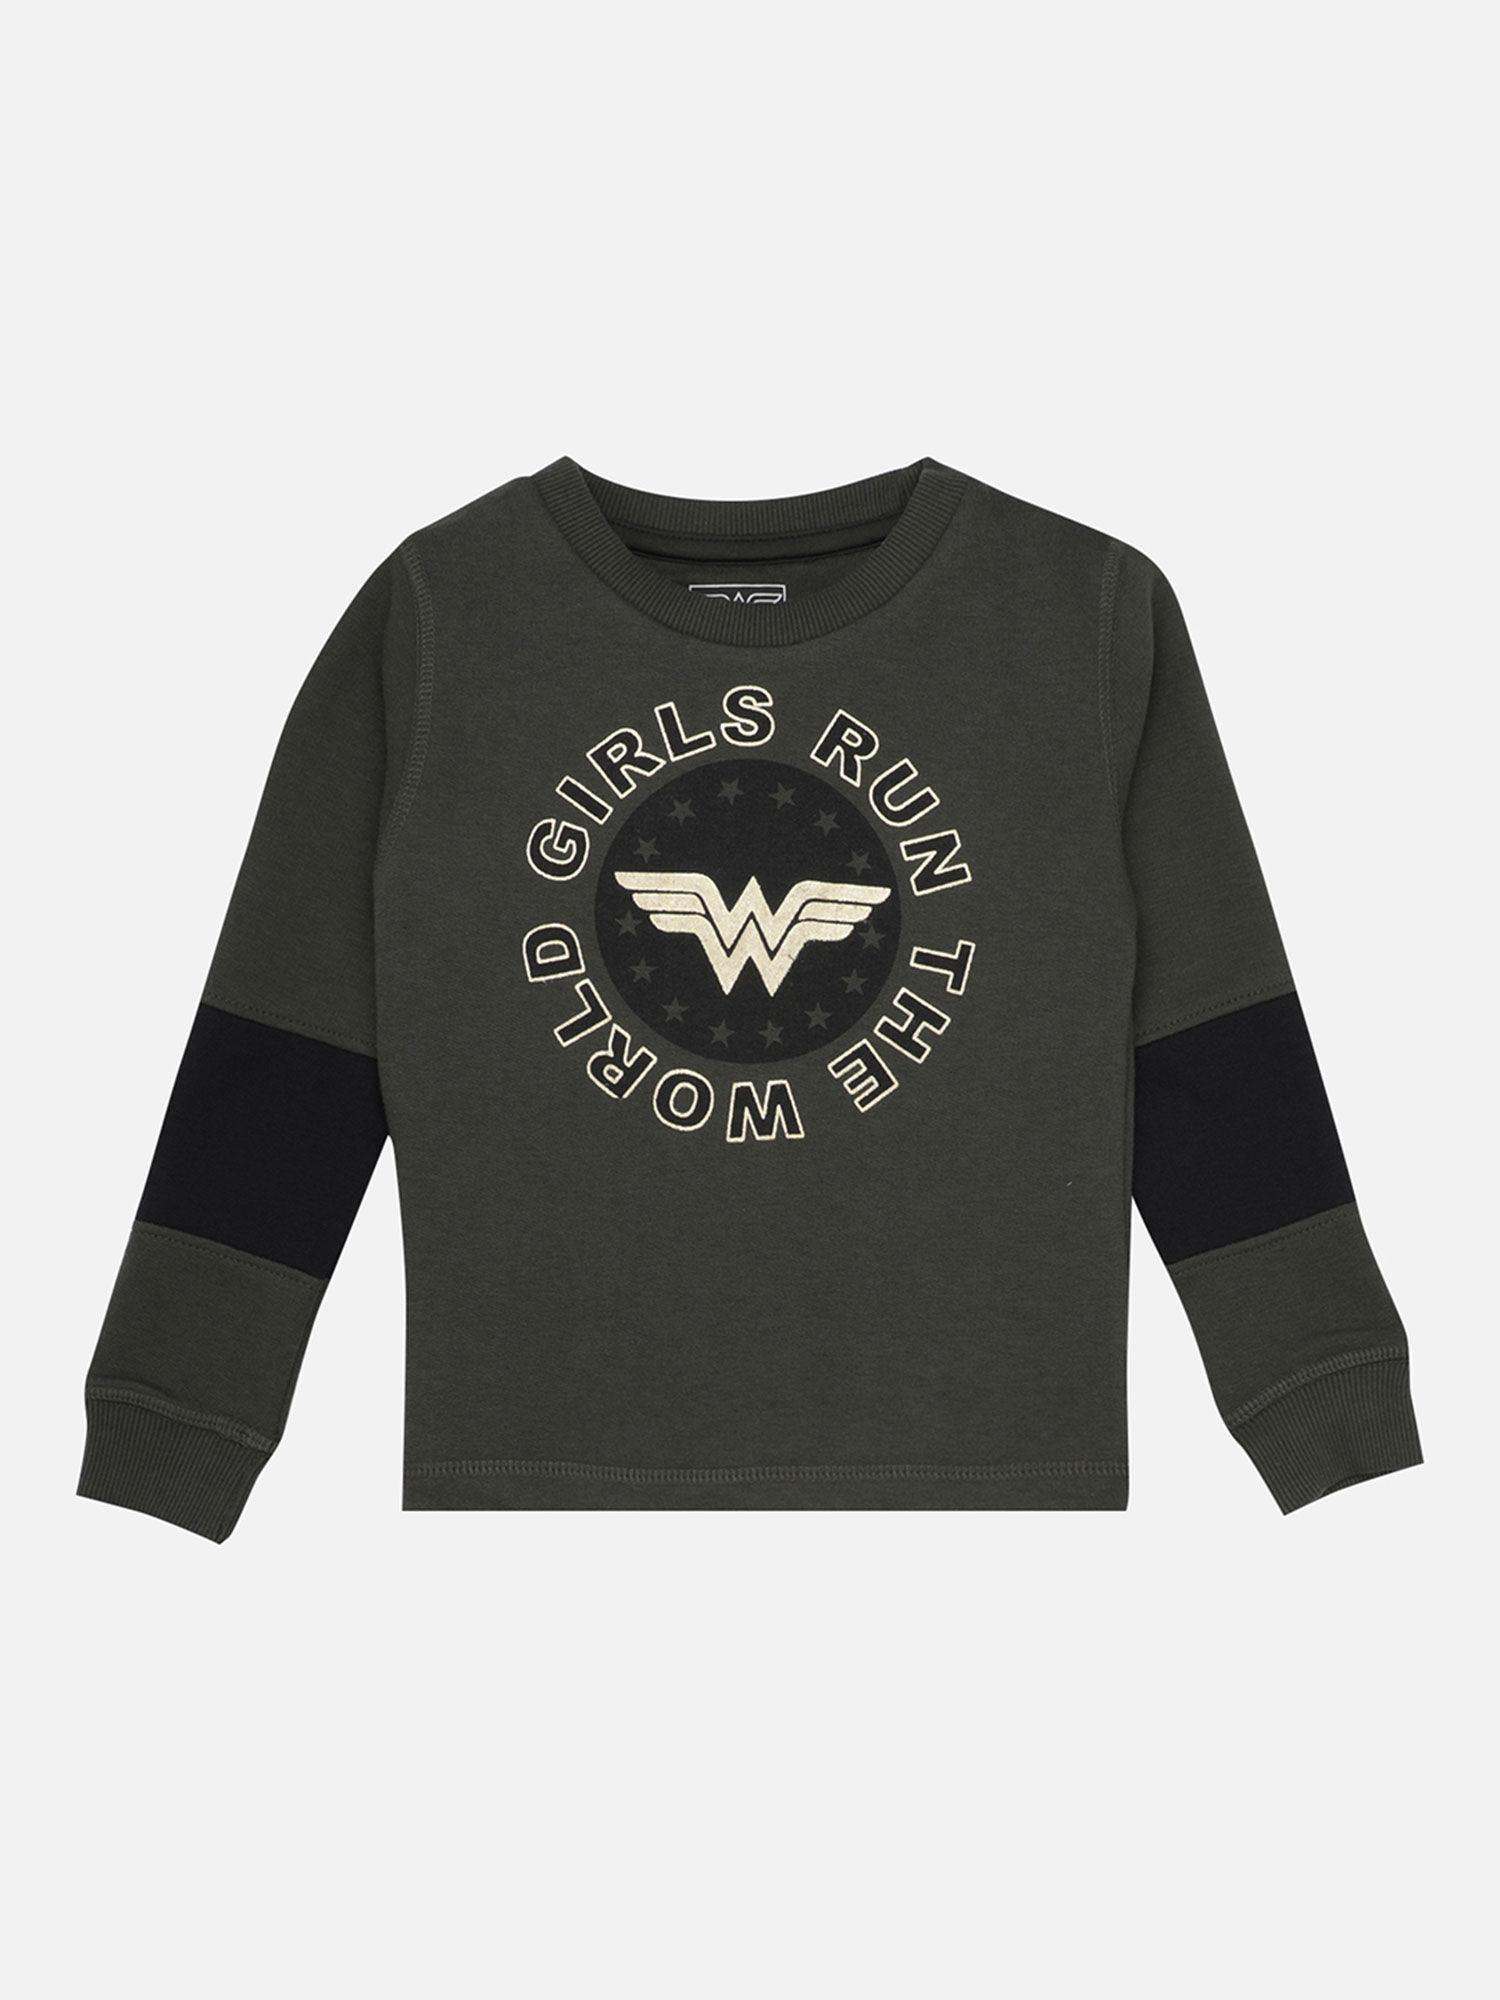 wonder woman featured olive sweatshirt for girls